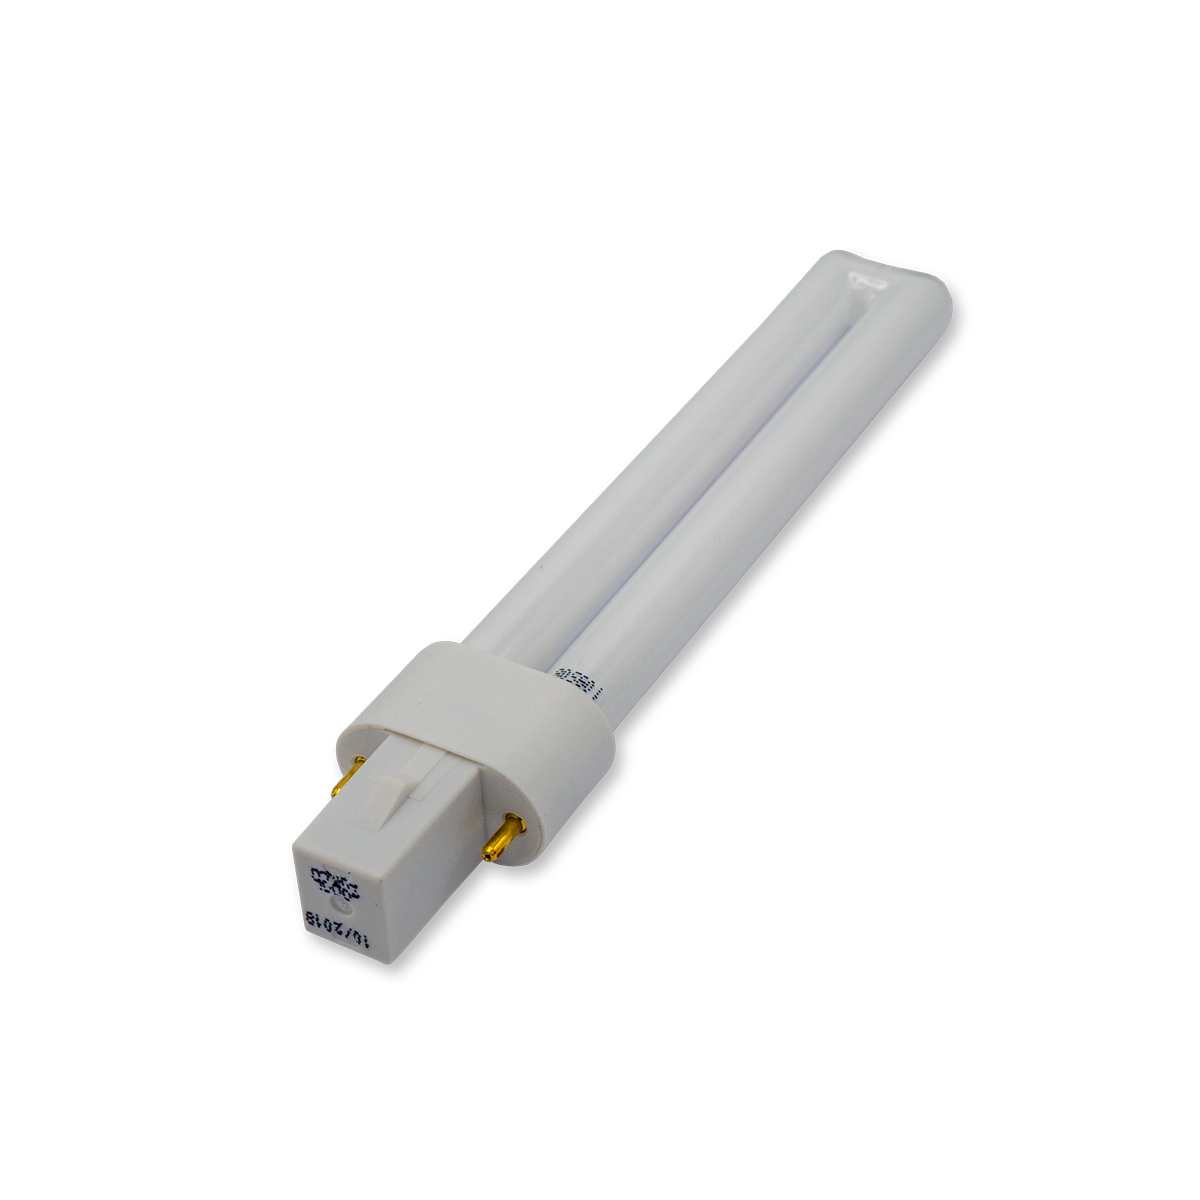 UVA fluorescent lamp 9 W, 400 – 500 nm, 1 pc.